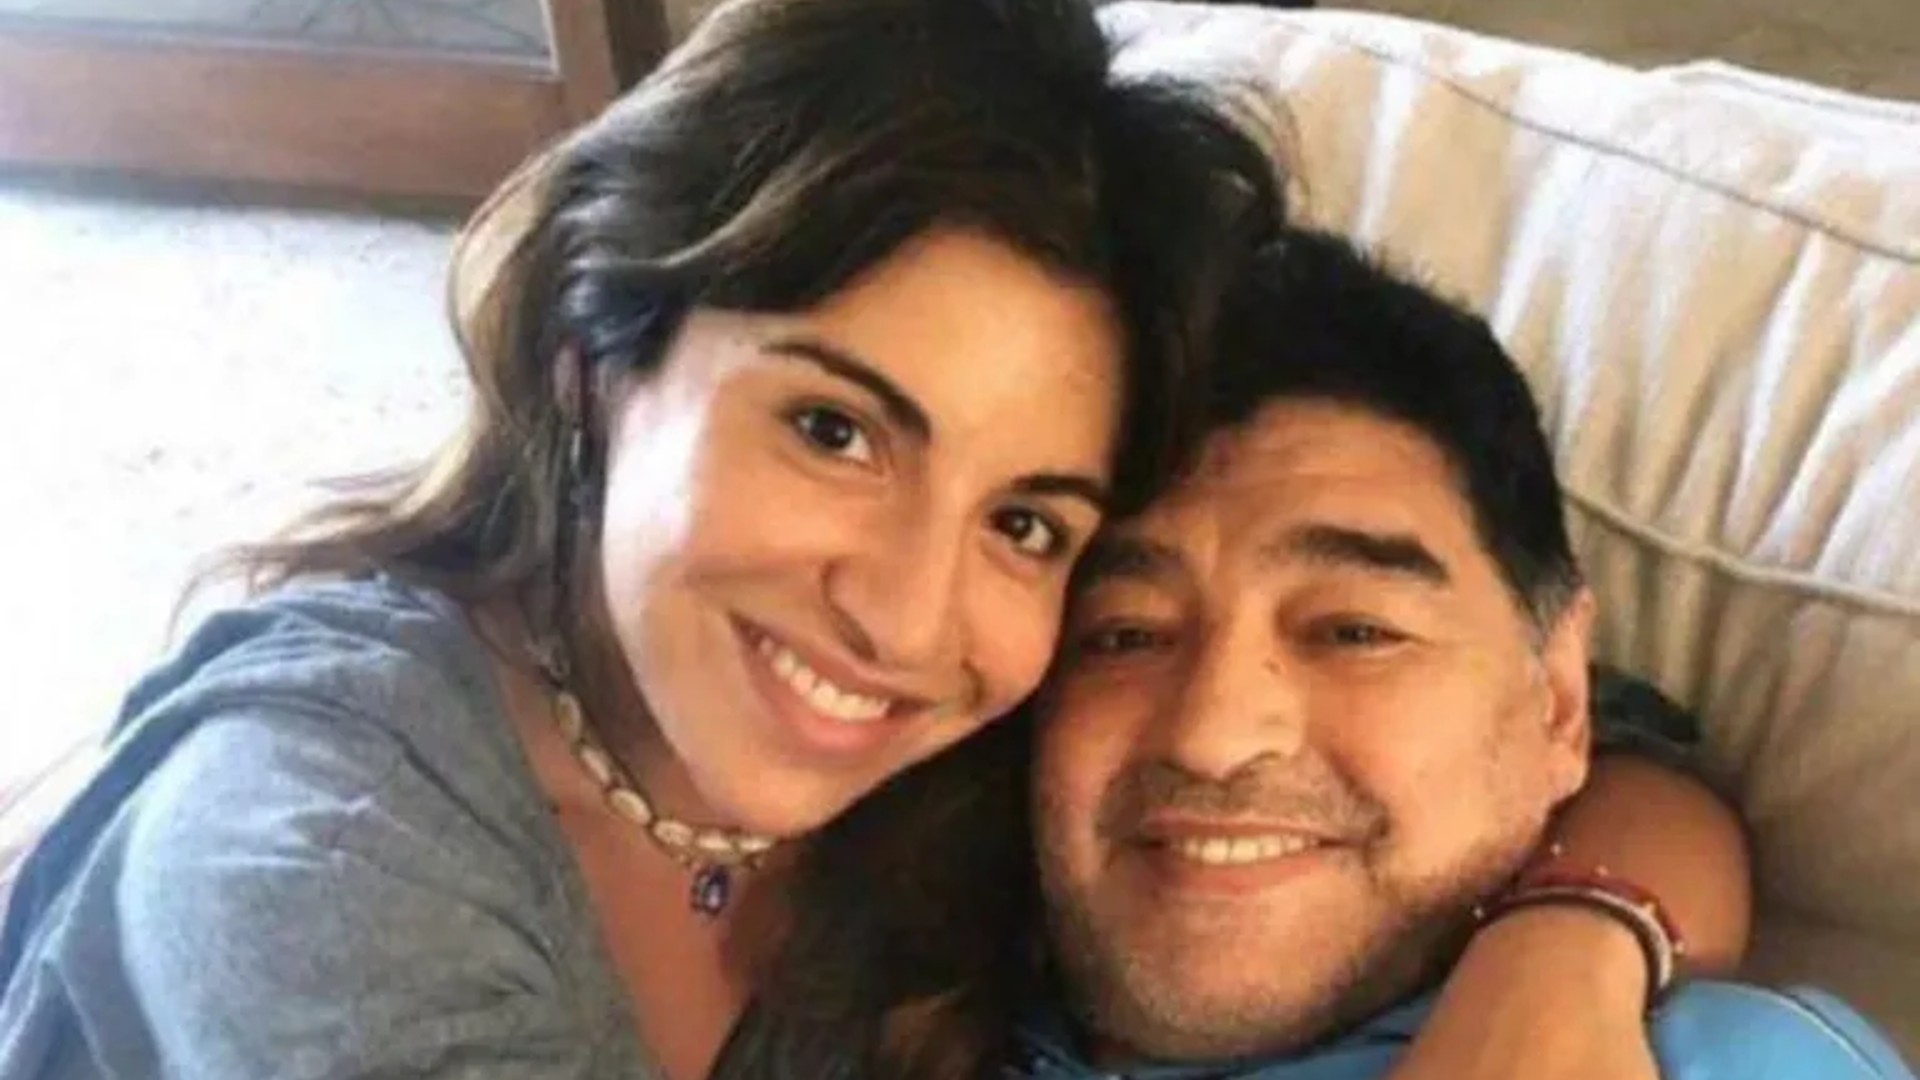 Gianinna Maradona junto a su padre.